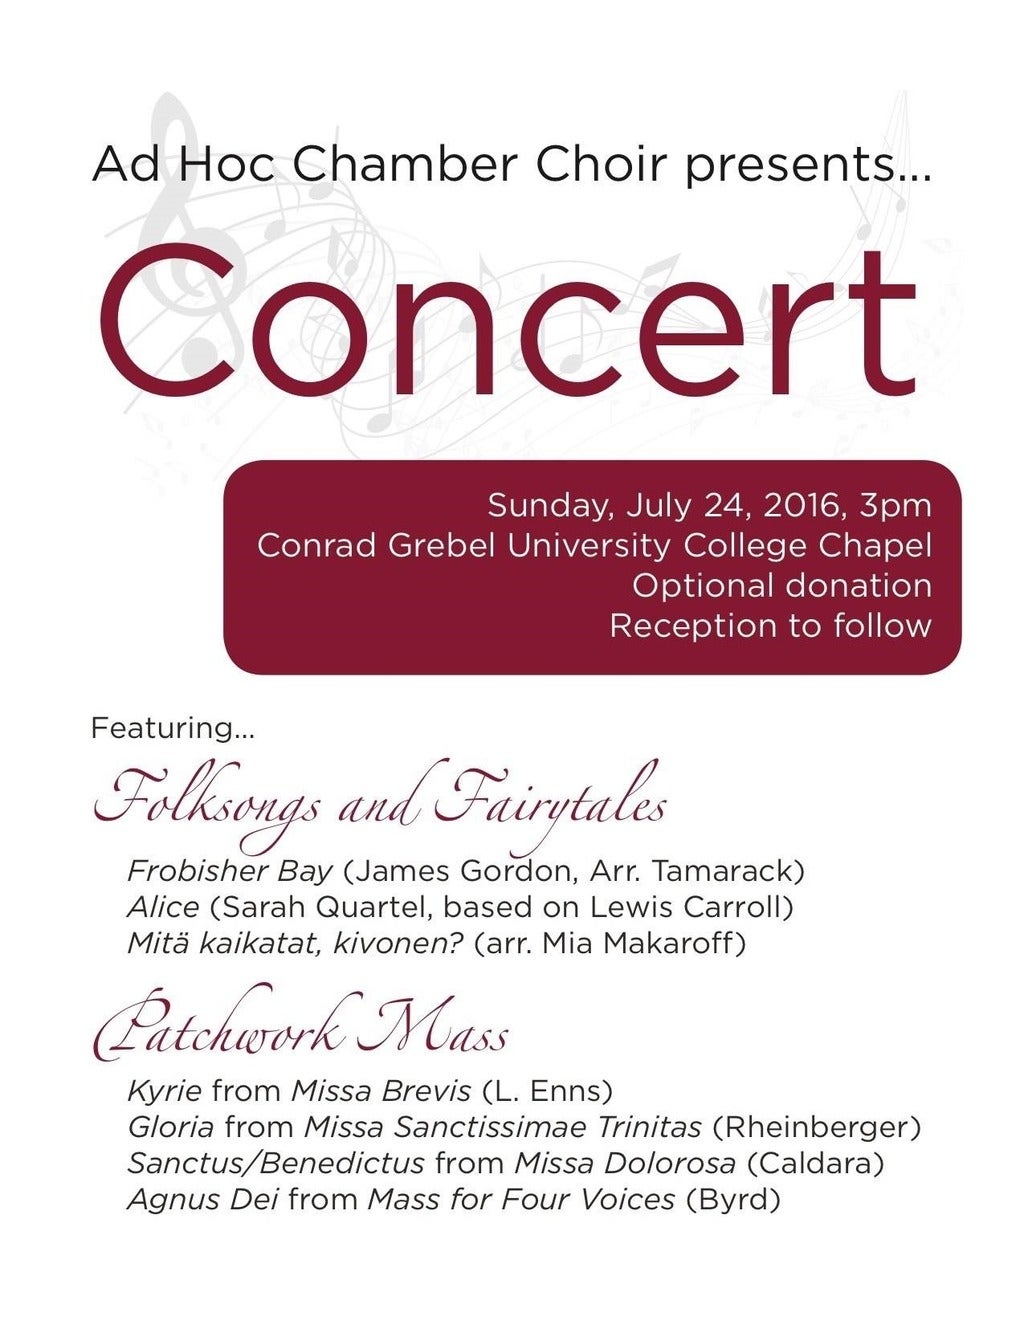 Ad Hoc Chamber Choir poster